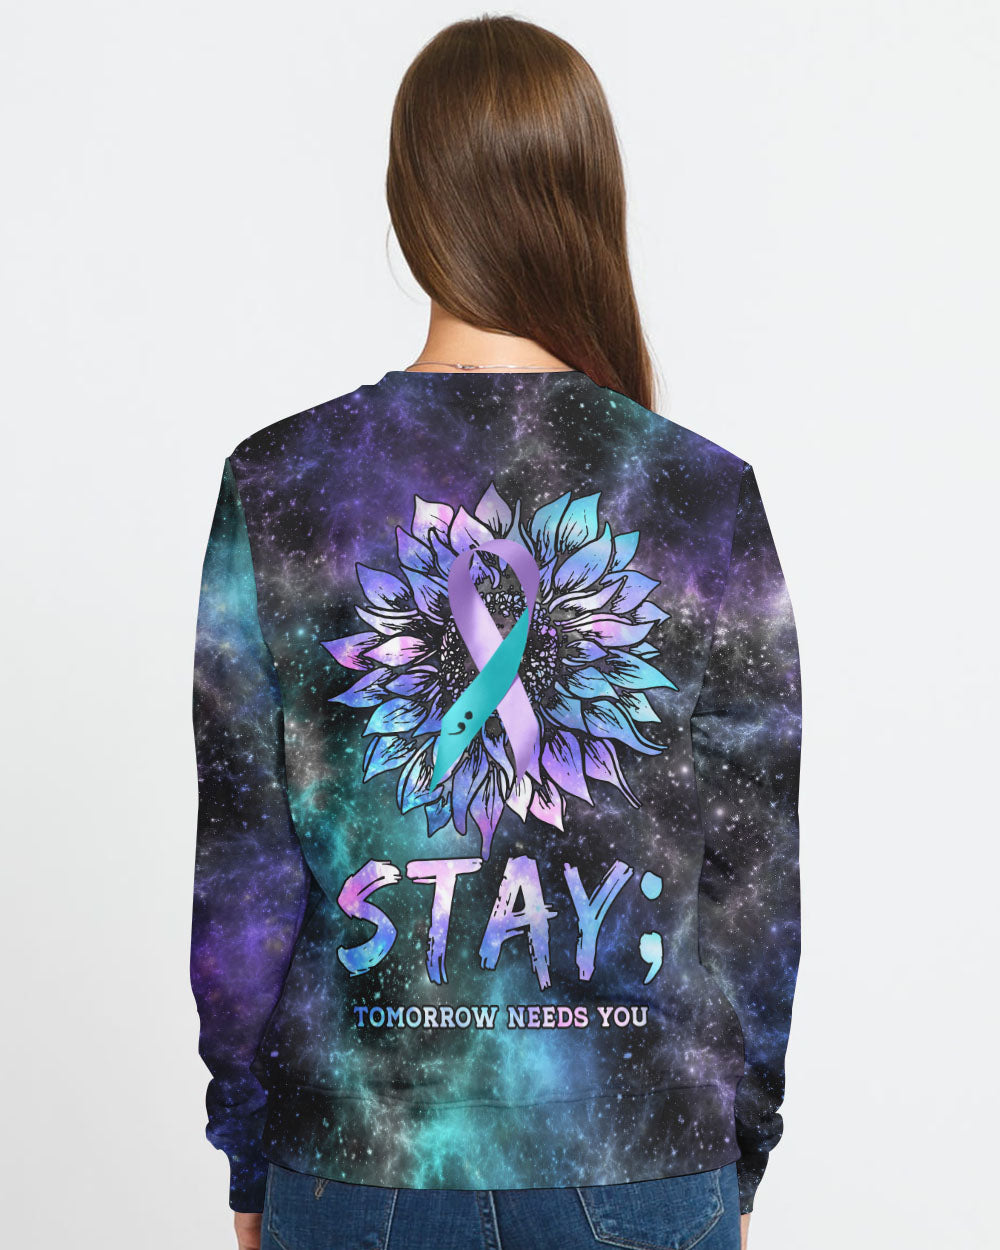 Stay Tomorrow Needs You Women's Suicide Prevention Awareness Sweatshirt